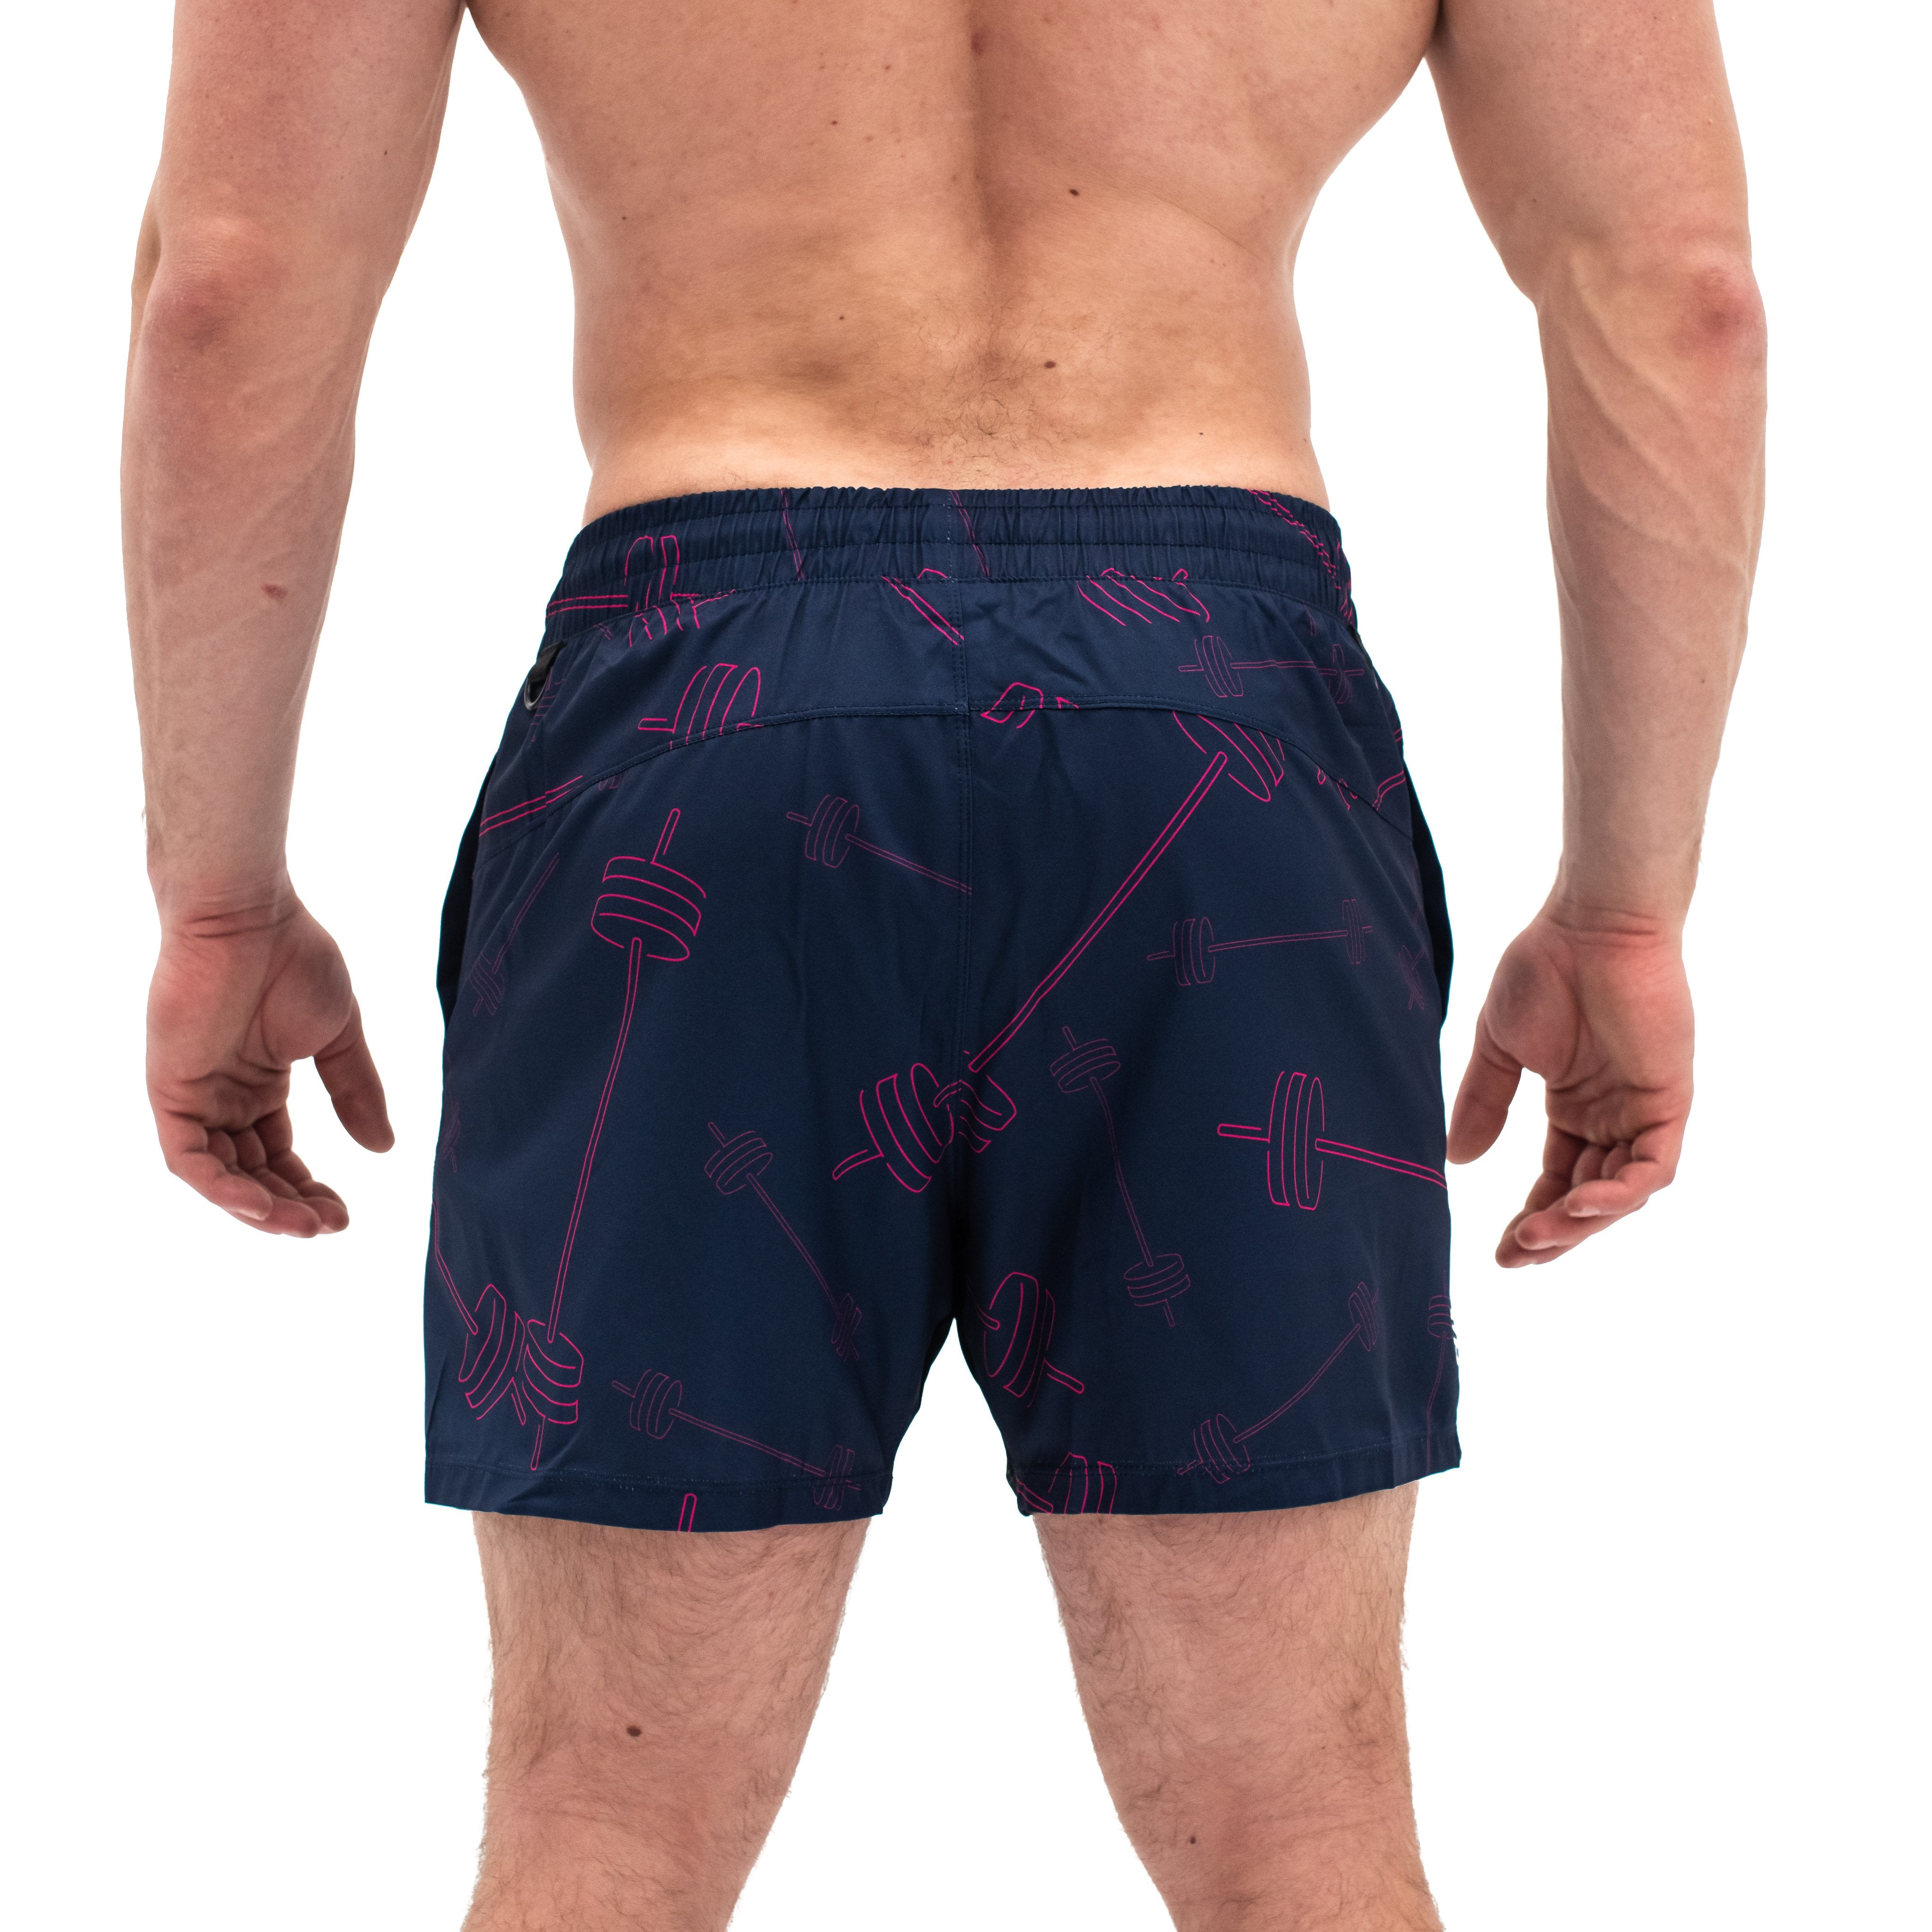 KWD Men's Squat Shorts - Freedom | A7 UK Shipping to Europe